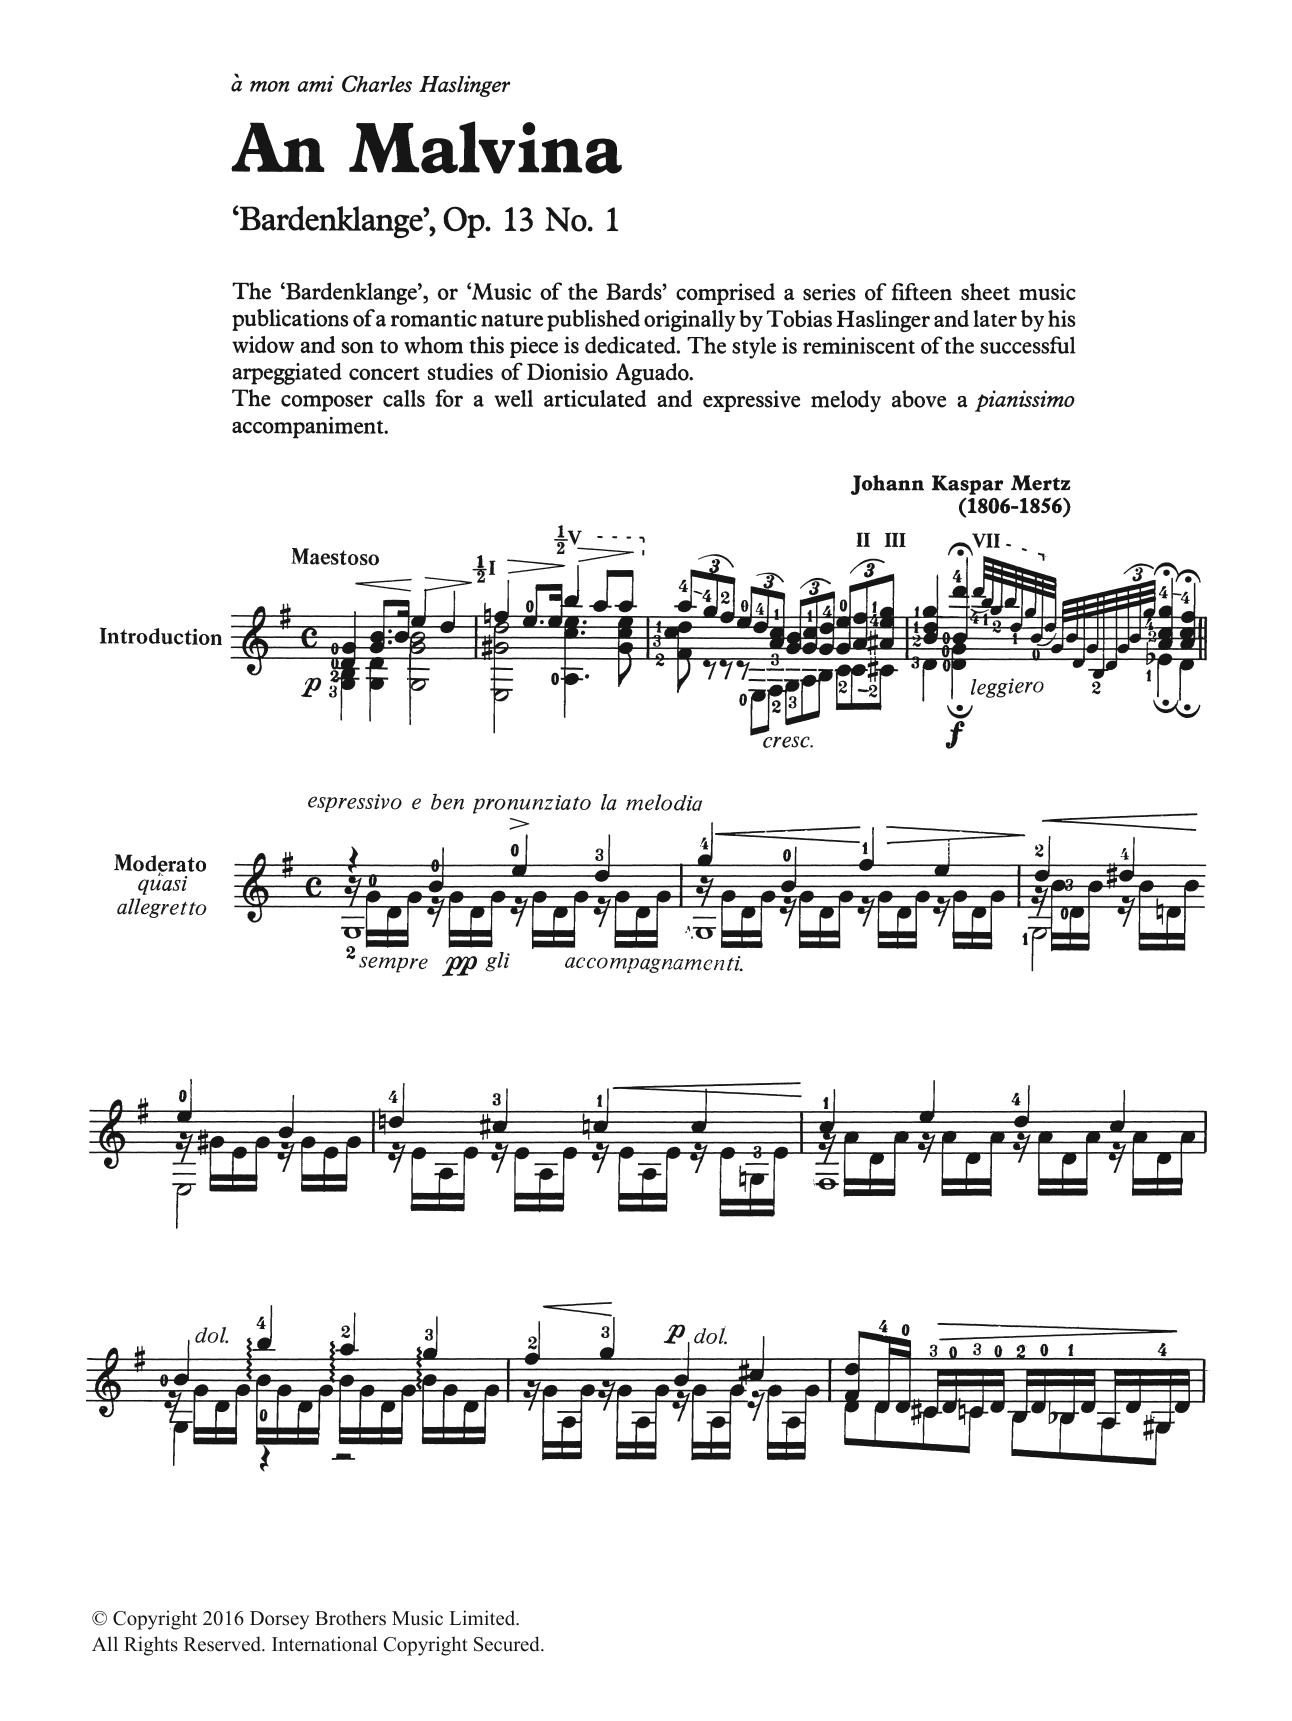 Download Johann Kaspar Mertz An Malvina Sheet Music and learn how to play Guitar PDF digital score in minutes